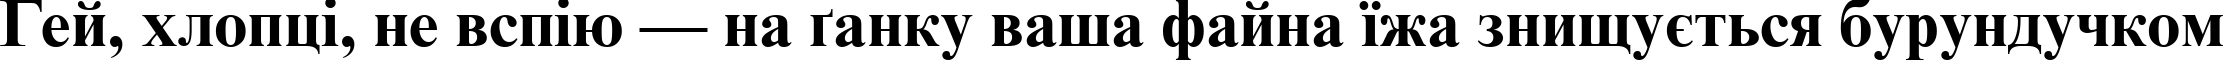 Пример написания шрифтом Times New Roman Cyr Bold текста на украинском